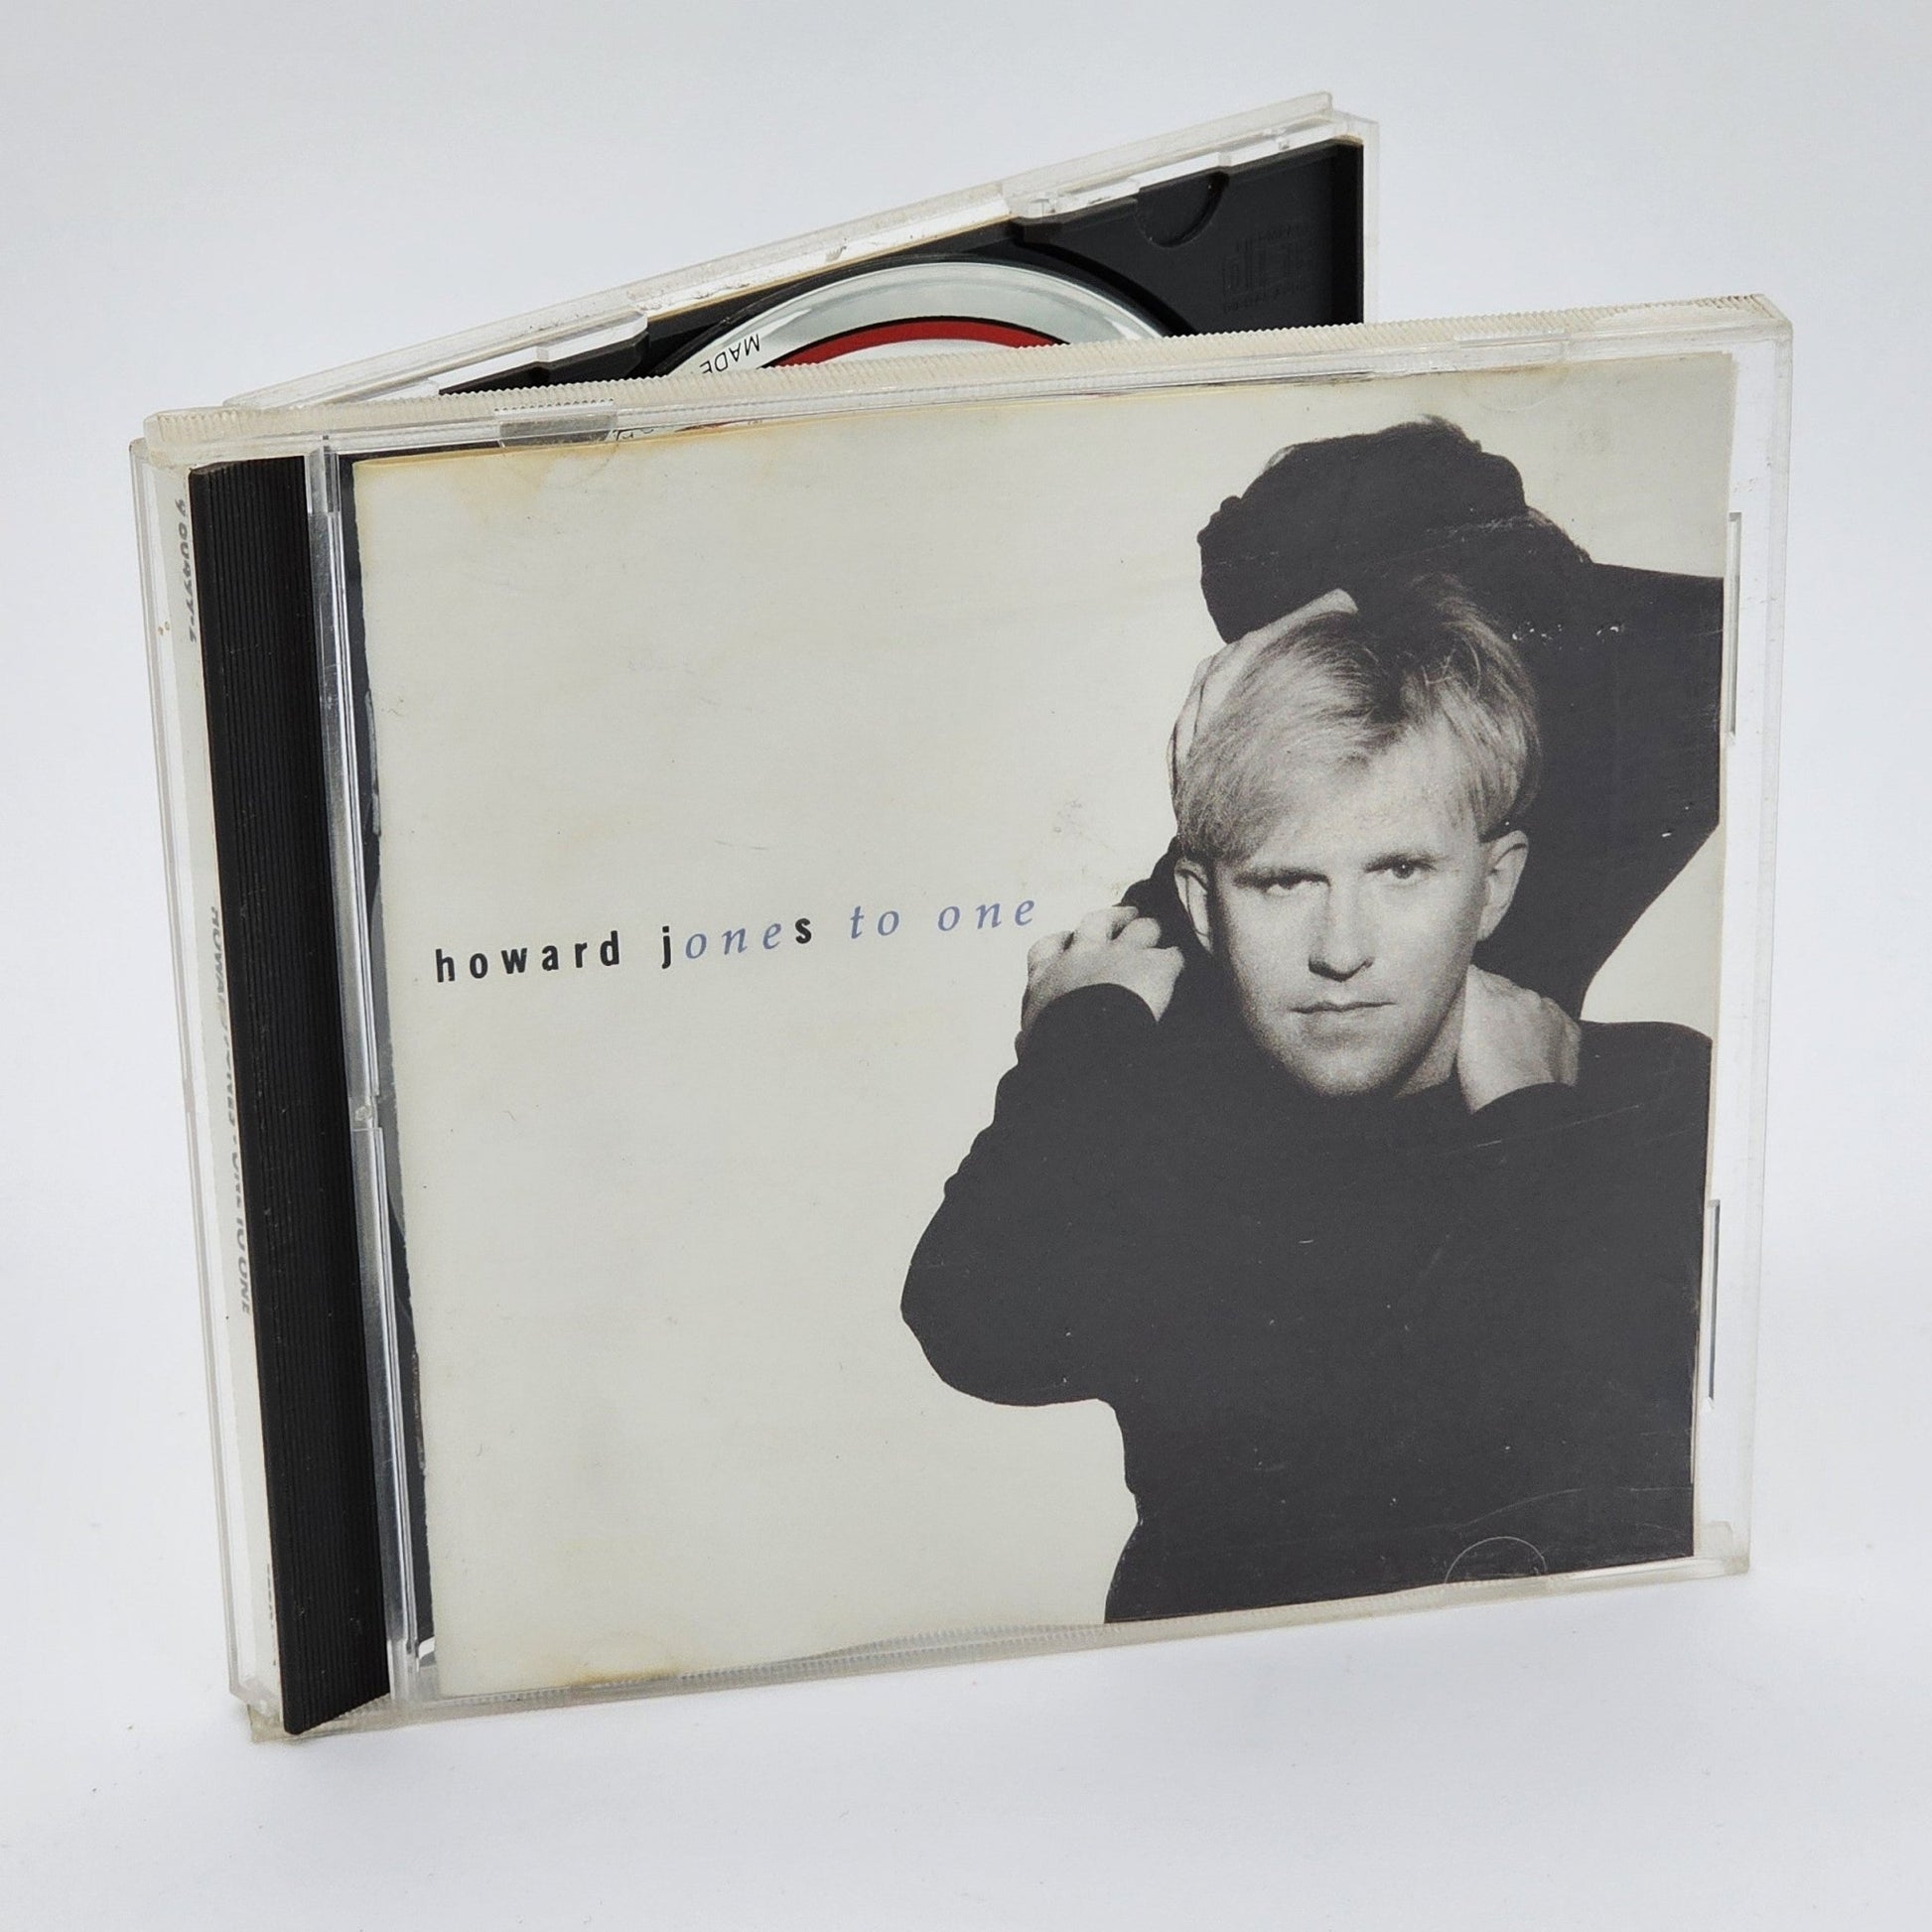 Elektra Records - Howard Jones | One To One | CD - Compact Disc - Steady Bunny Shop